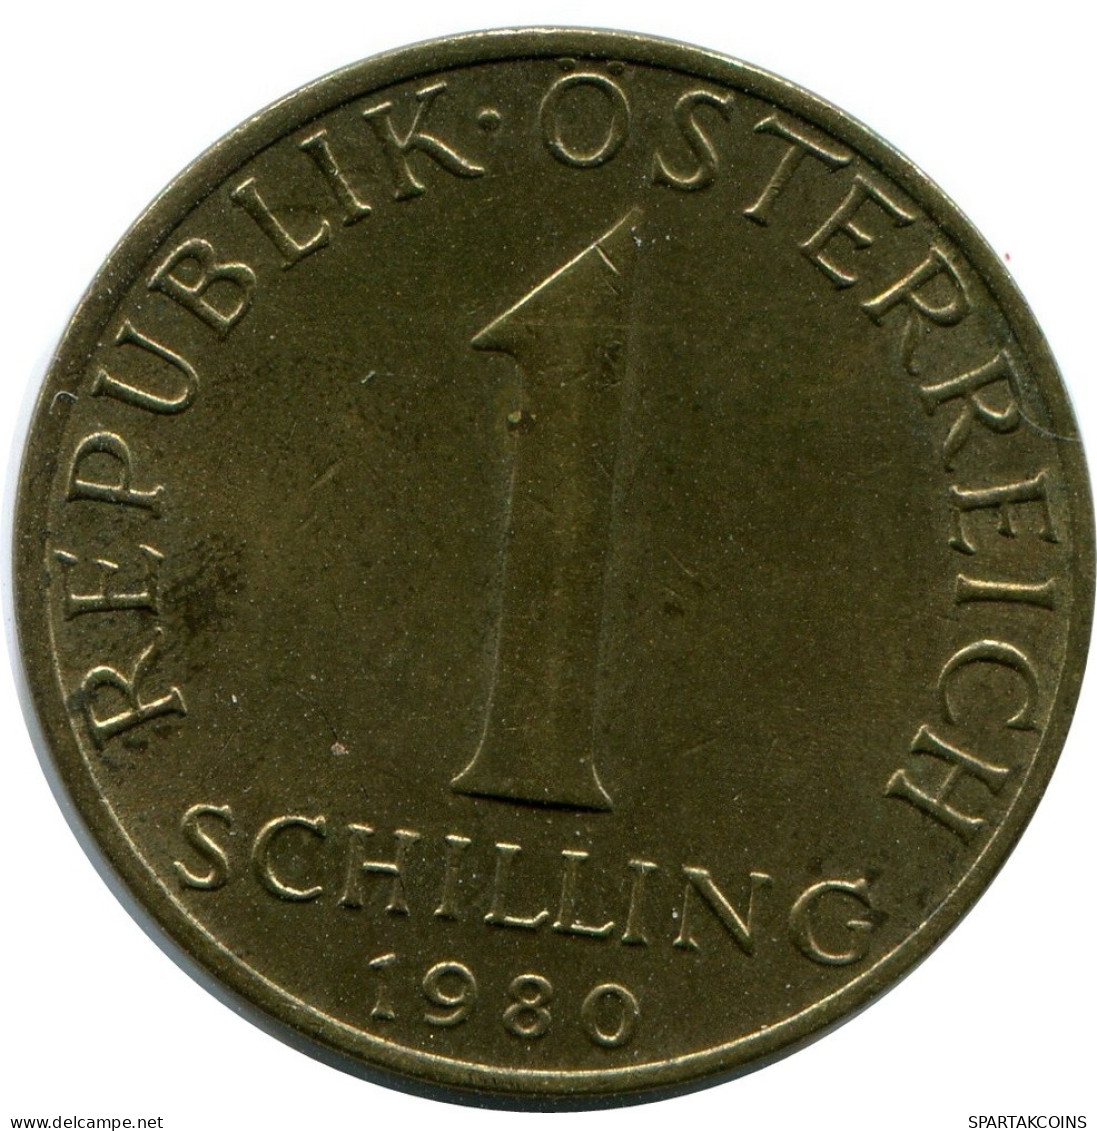 1 SCHILLING 1980 AUSTRIA Coin #AW813.U.A - Austria